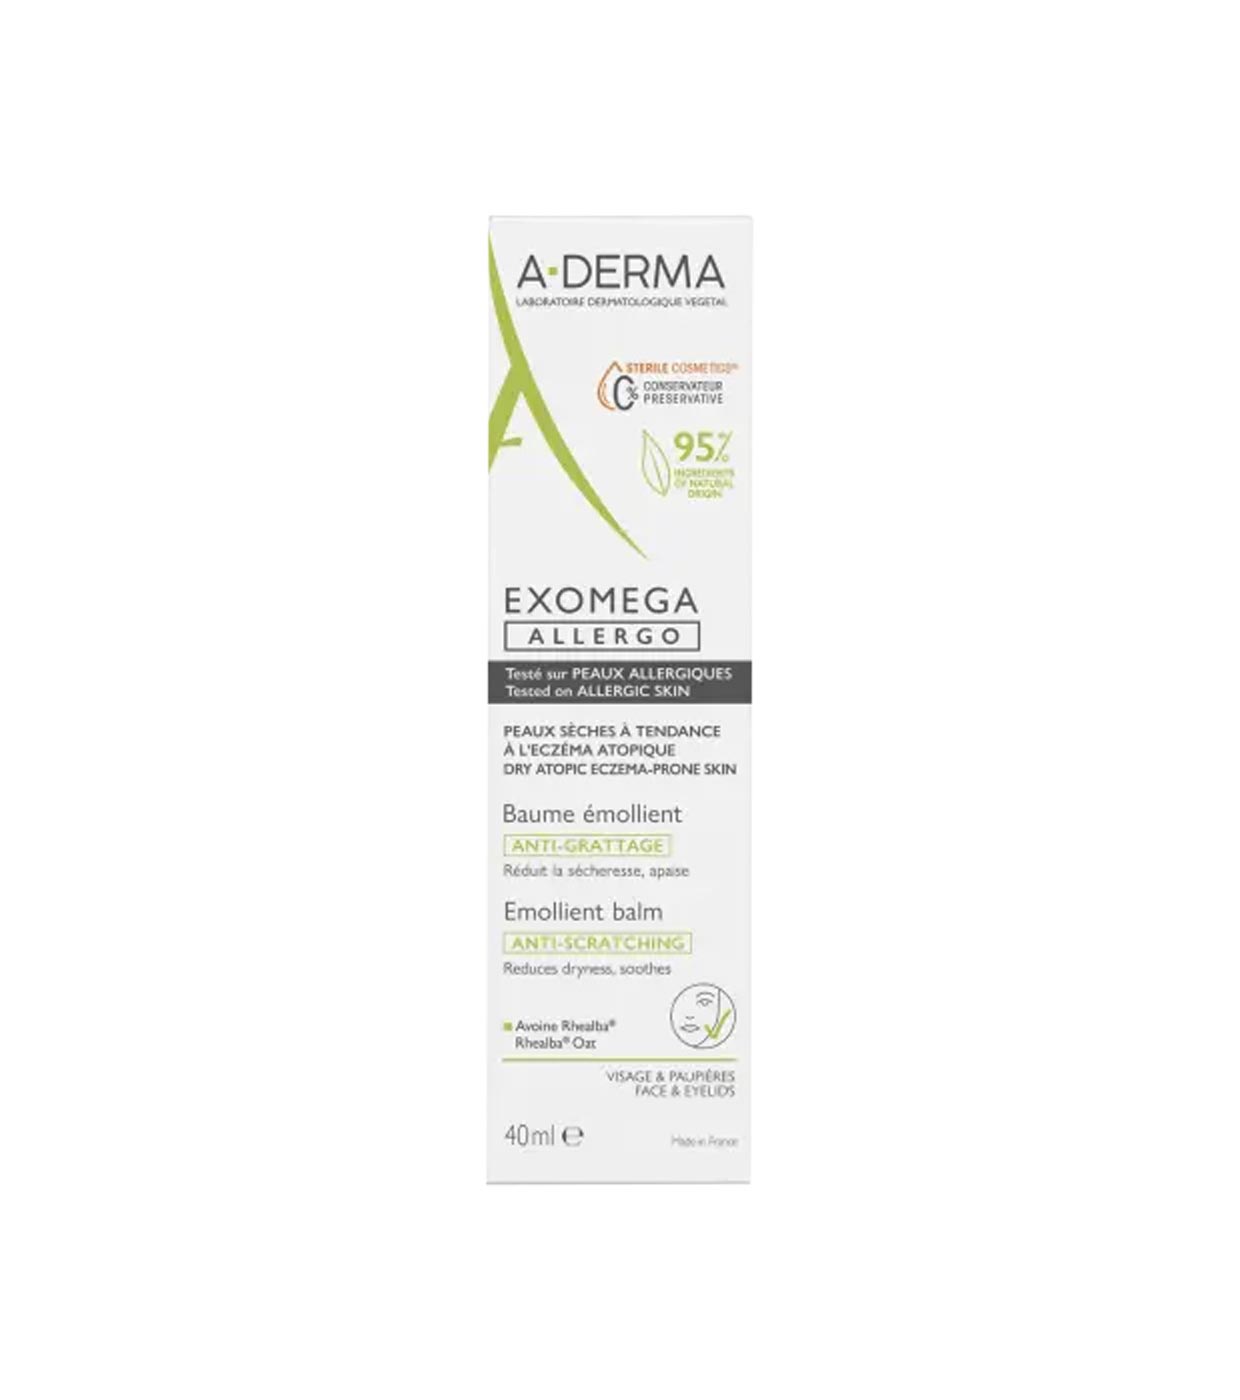 Buy A-Derma - *Exomega Control* - Anti-scratch emollient balm - 400ml